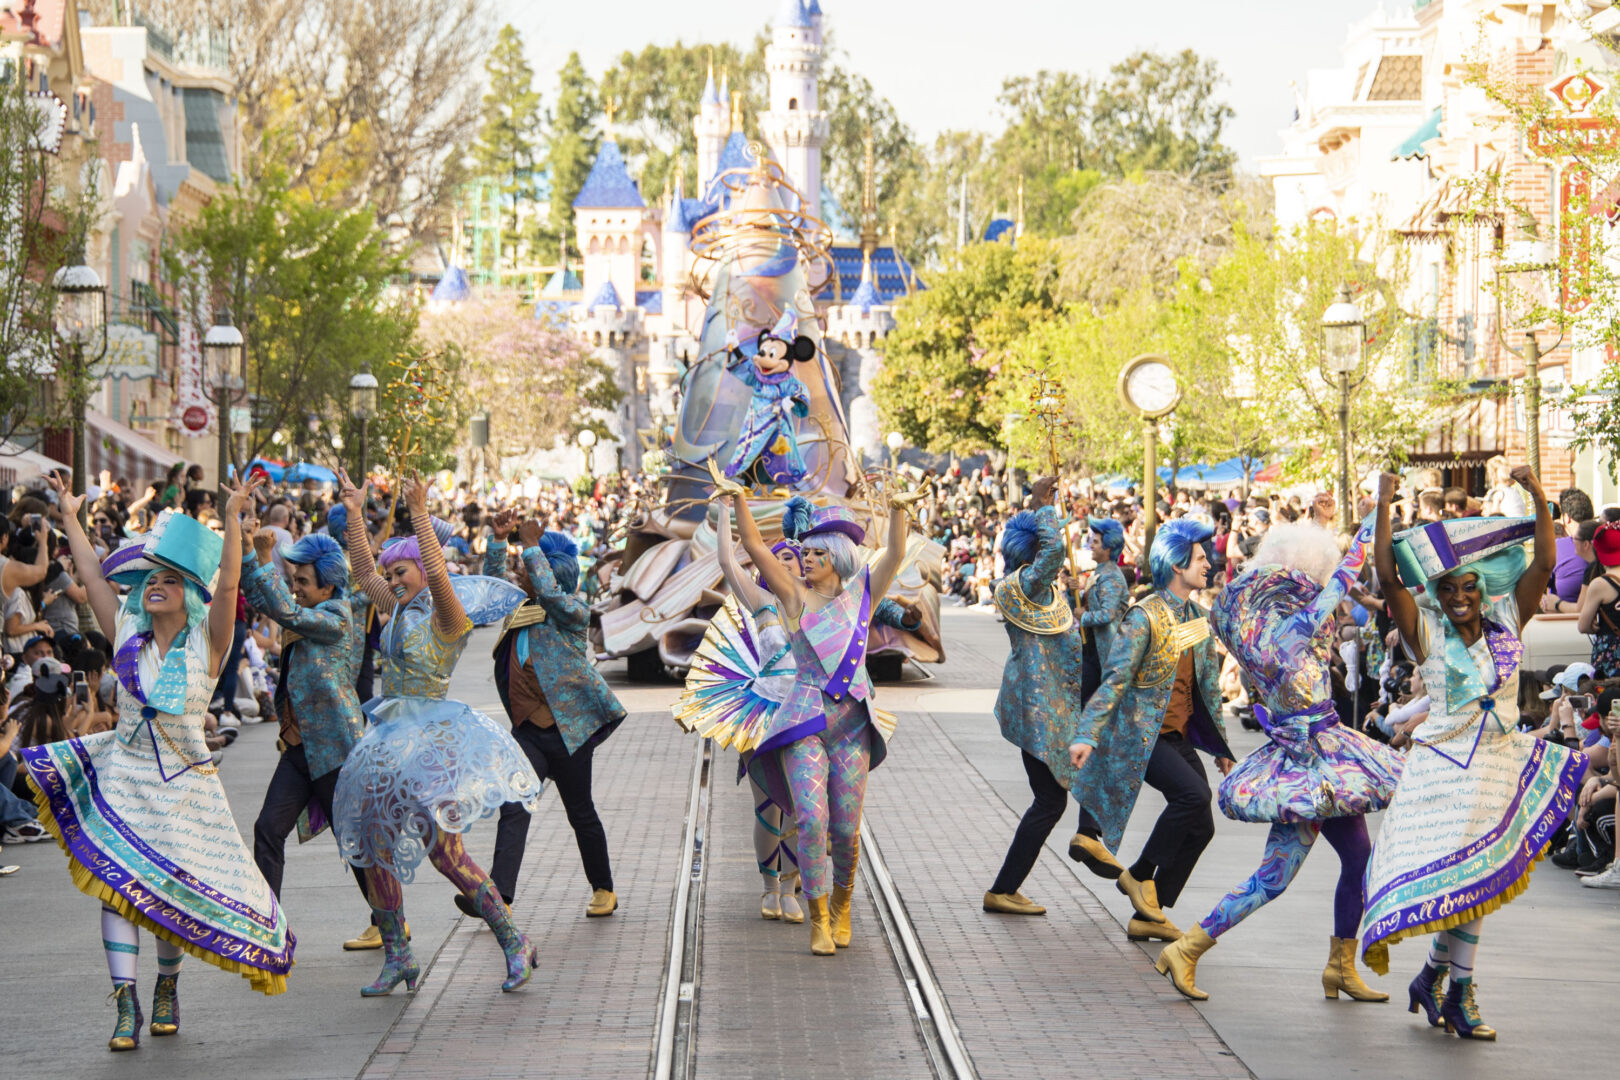 Magic Happens Parade Returns to Disneyland